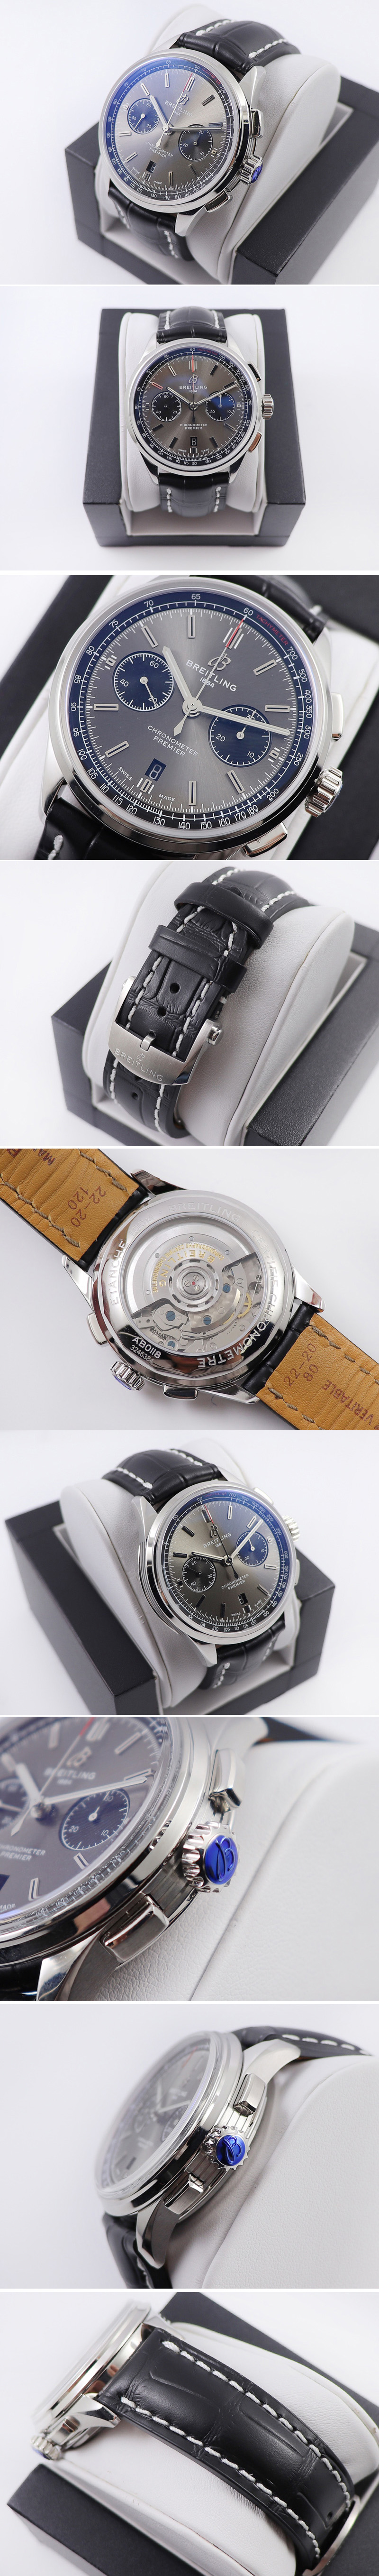 Replica Premier B01 Chronograph  Watches